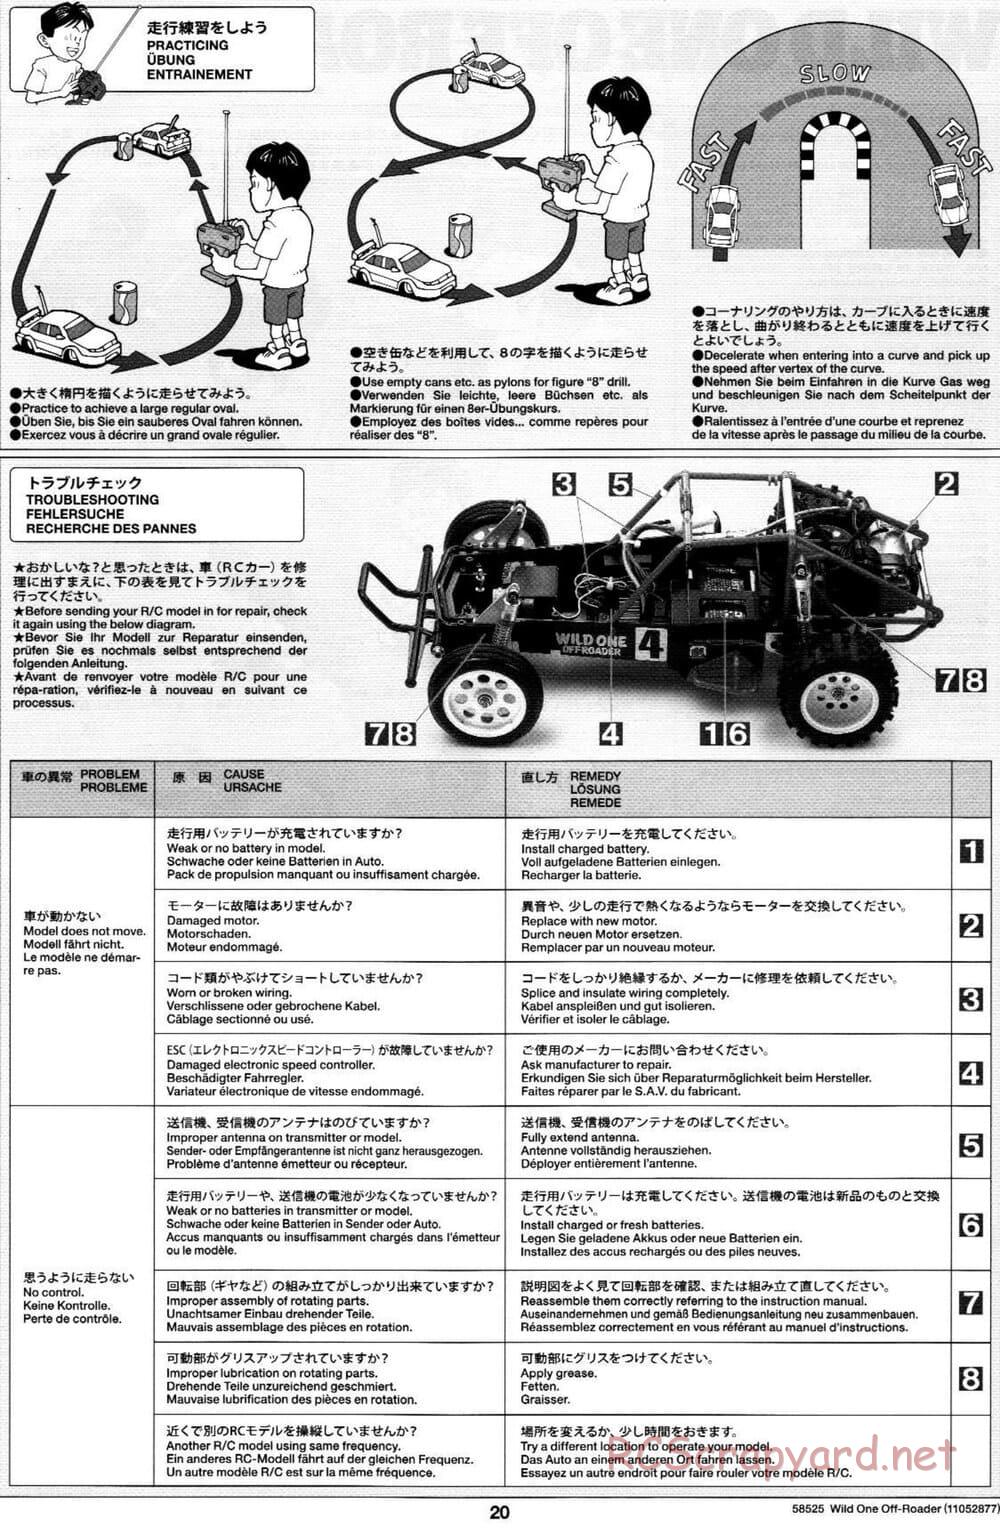 Tamiya - Wild One Off-Roader - FAV Chassis - Manual - Page 20